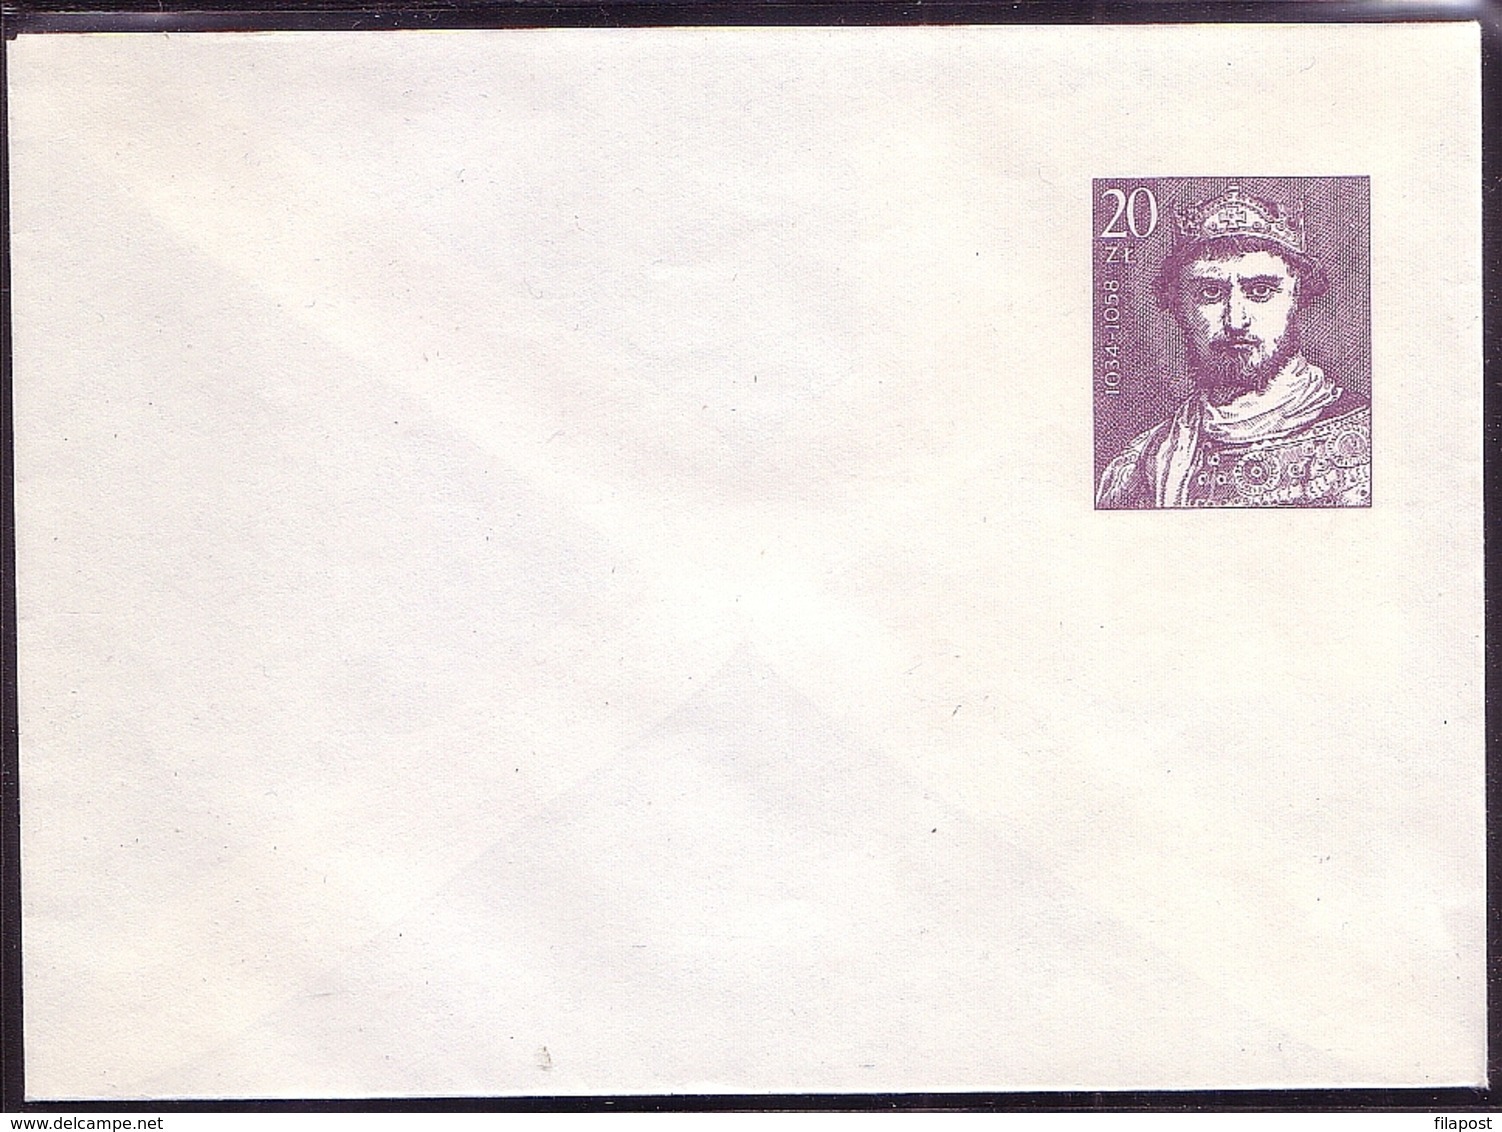 Poland 1988  Fi Ck 85 Error On The Stamp. No Olive Color Mint. King K. Odnowiciel Fotoatest Wysocki PZF - Abarten & Kuriositäten